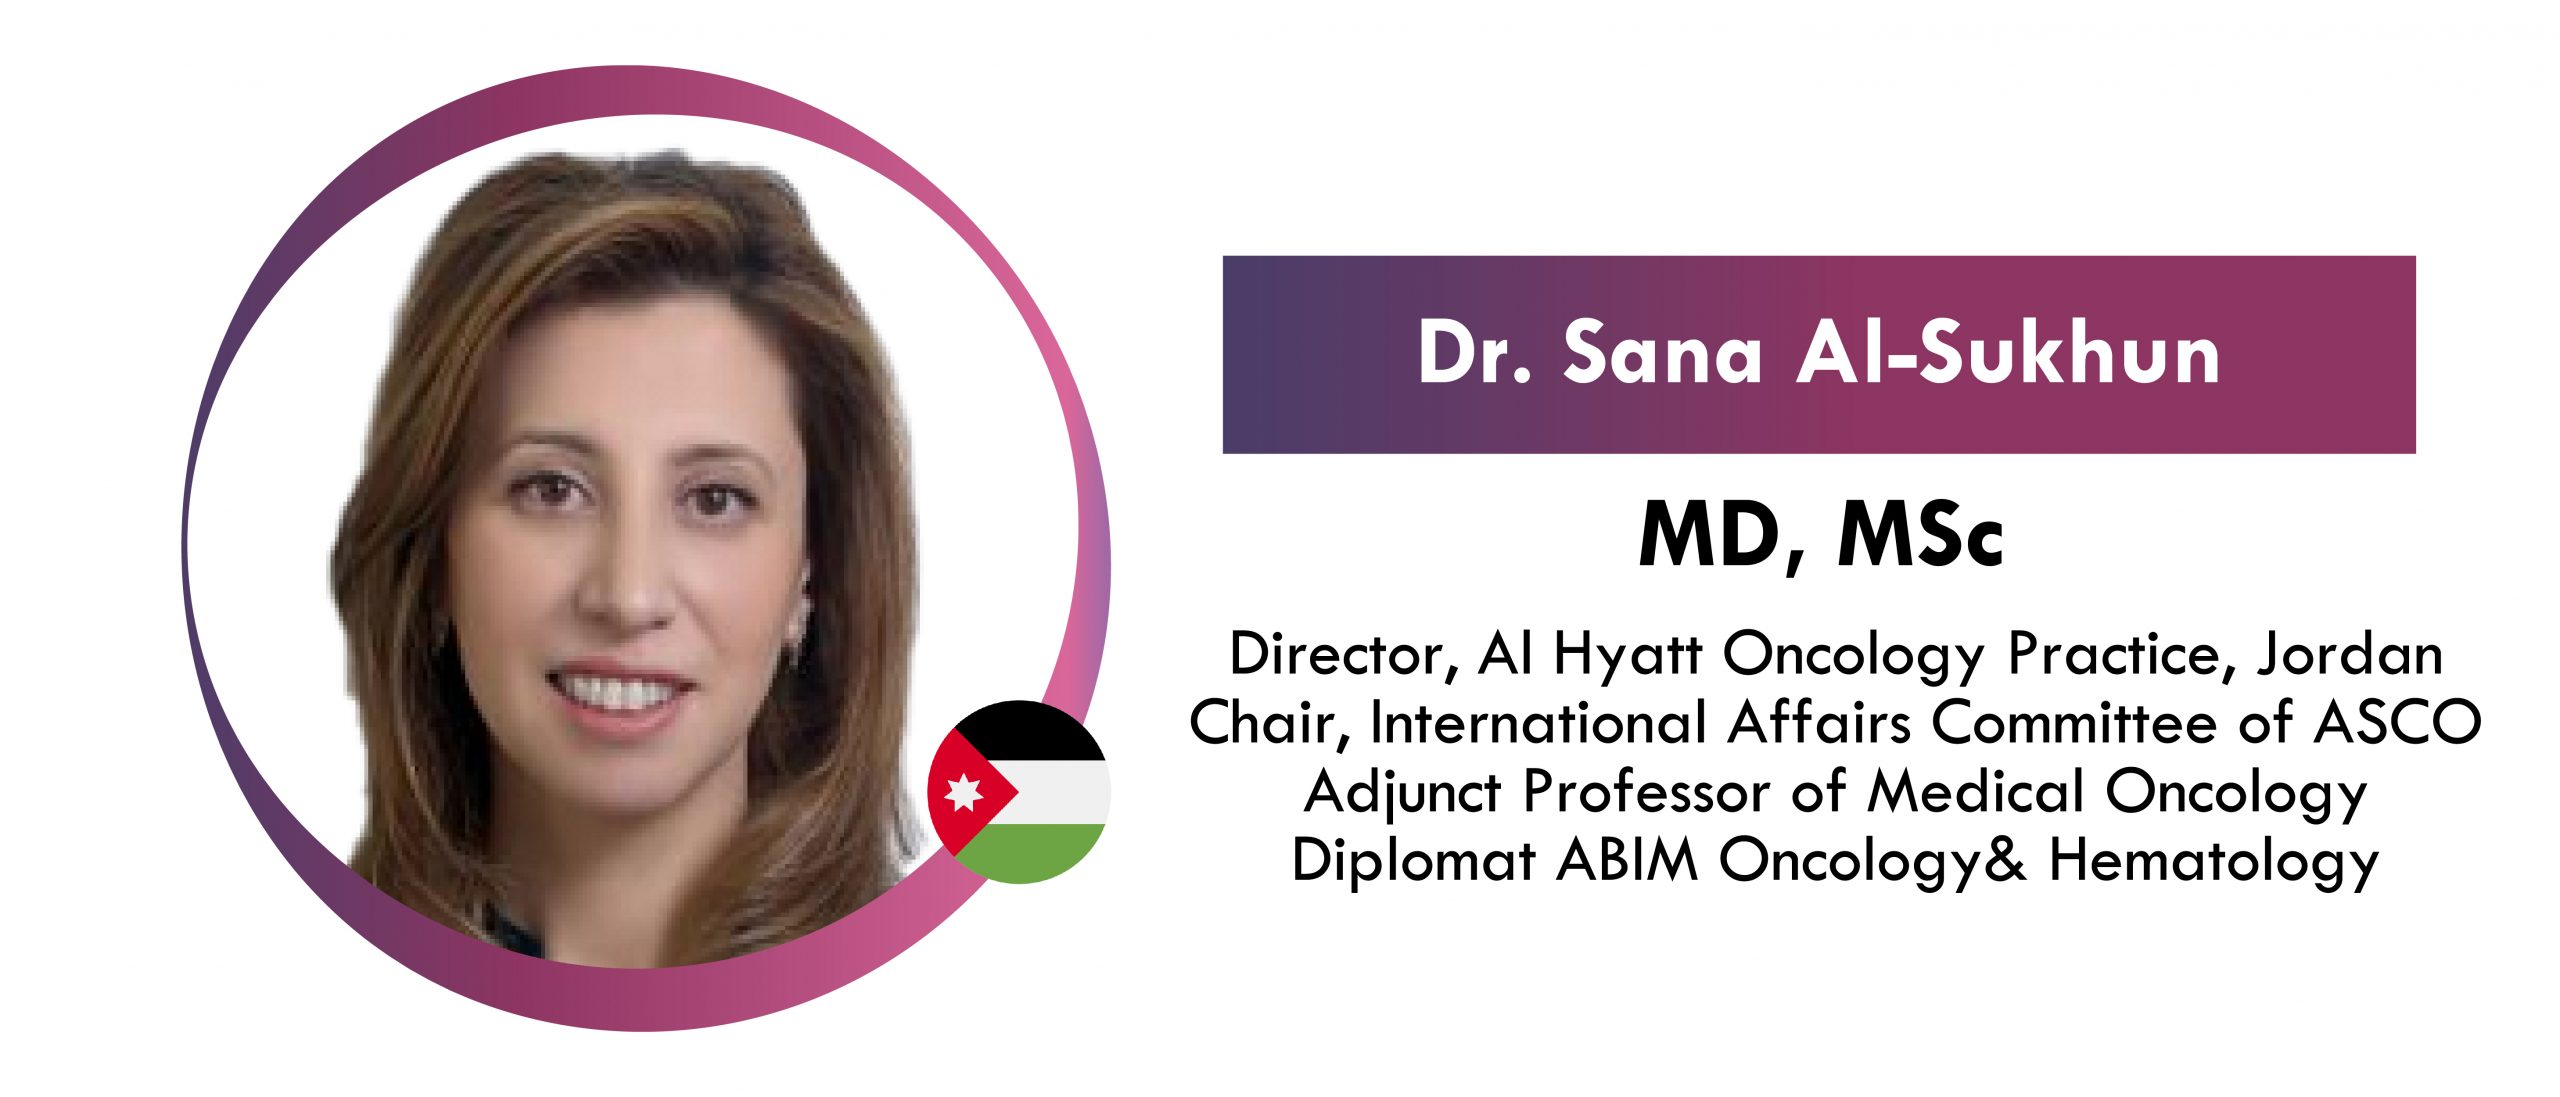 Dr. Sana Al-Sukhun